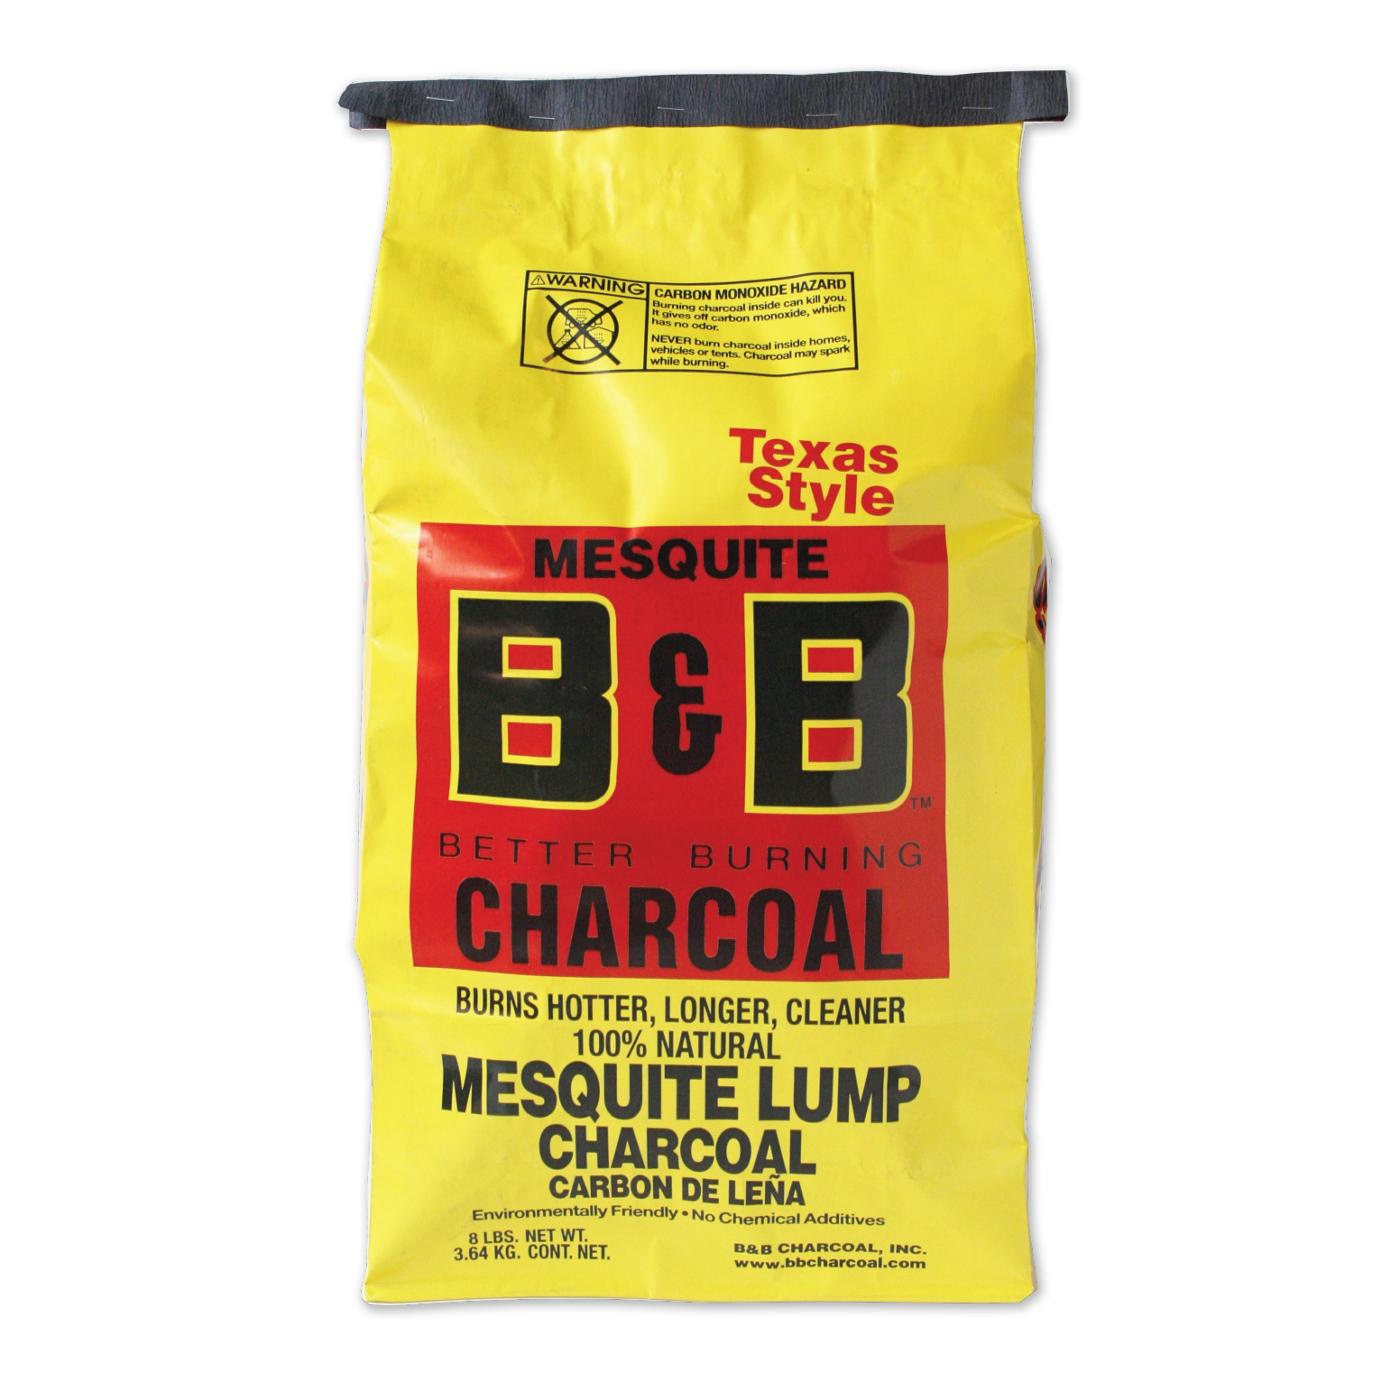 B&B Charcoal Mesquite Lump Charcoal; image 1 of 5